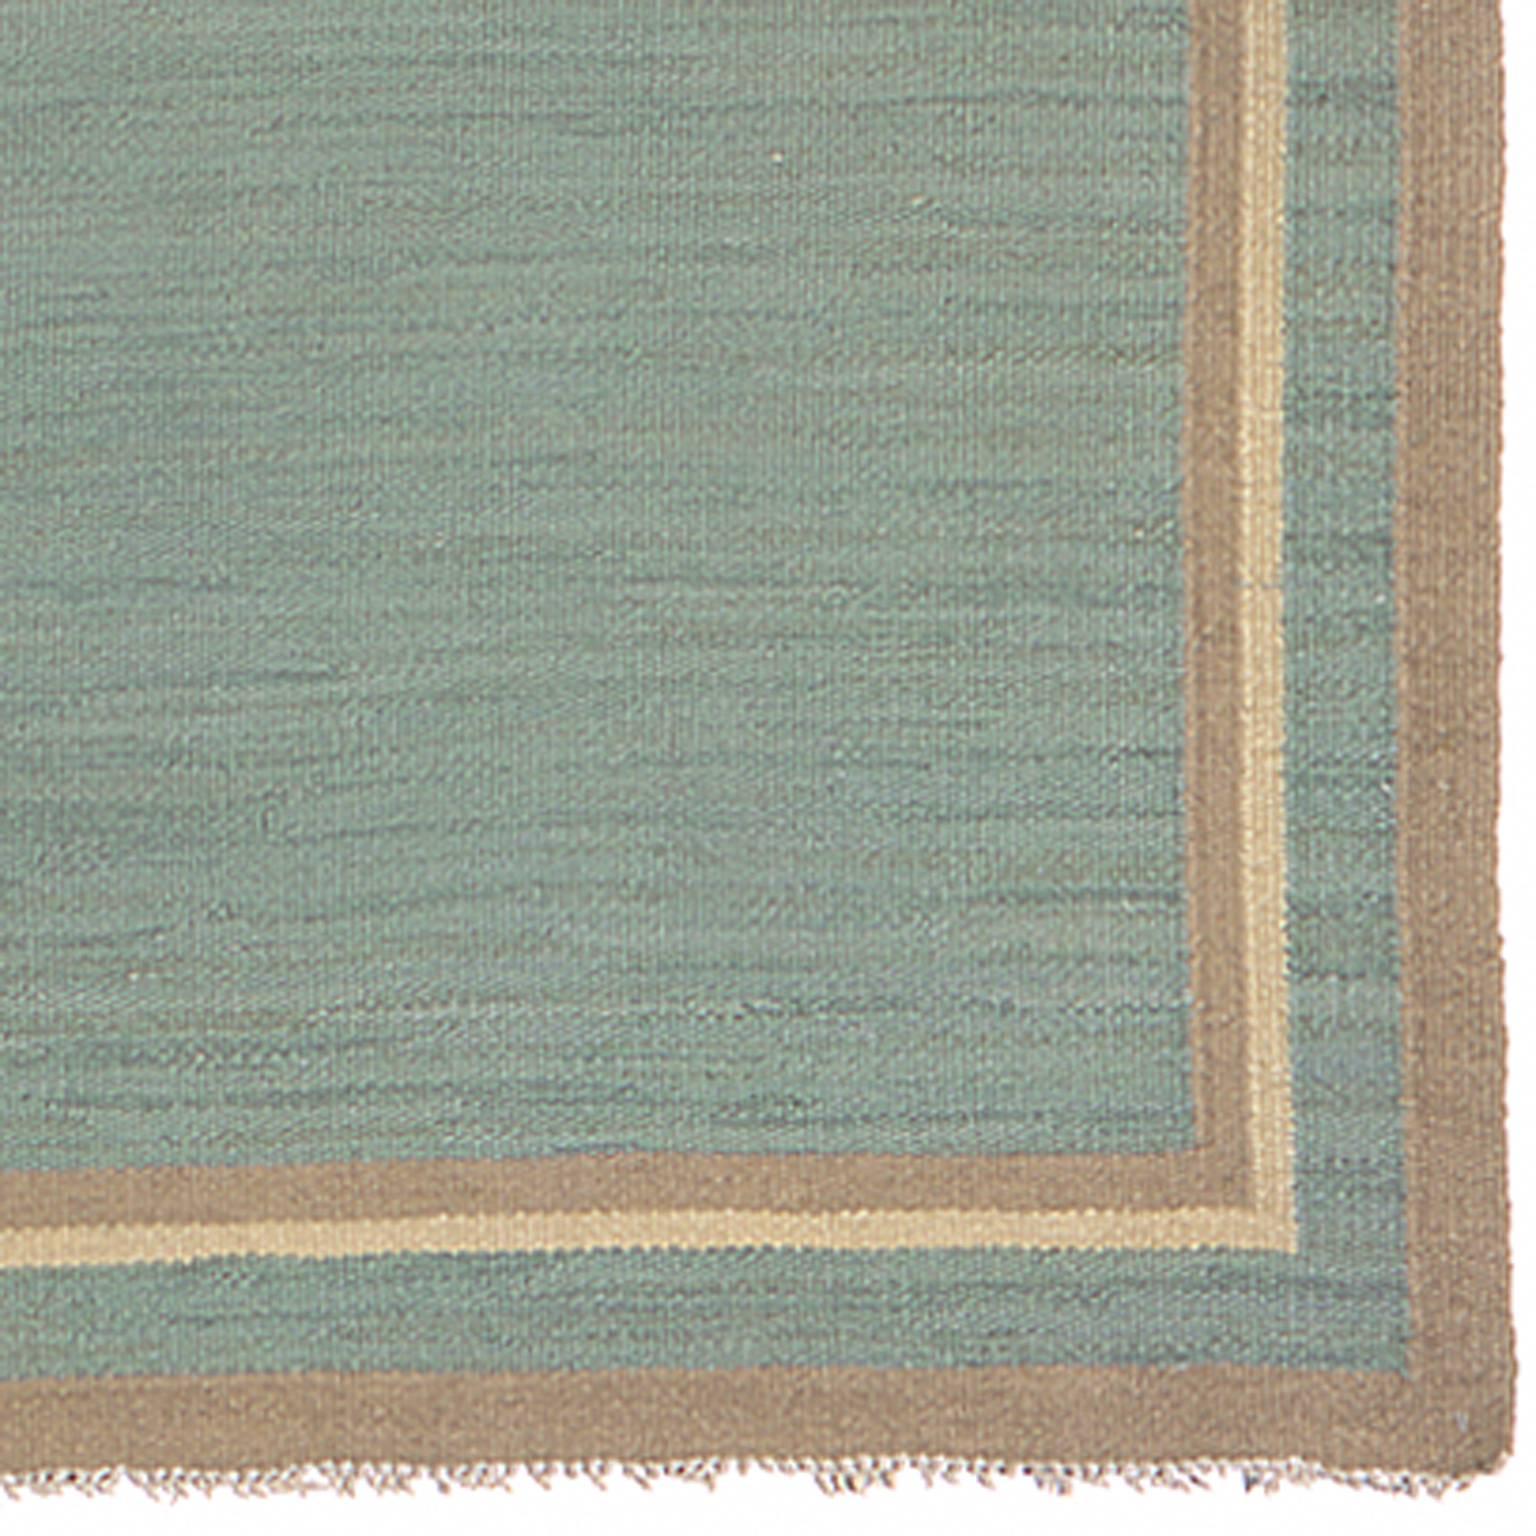 Mid-20th century Swedish flat carpet
Sweden ca 1941
handwoven